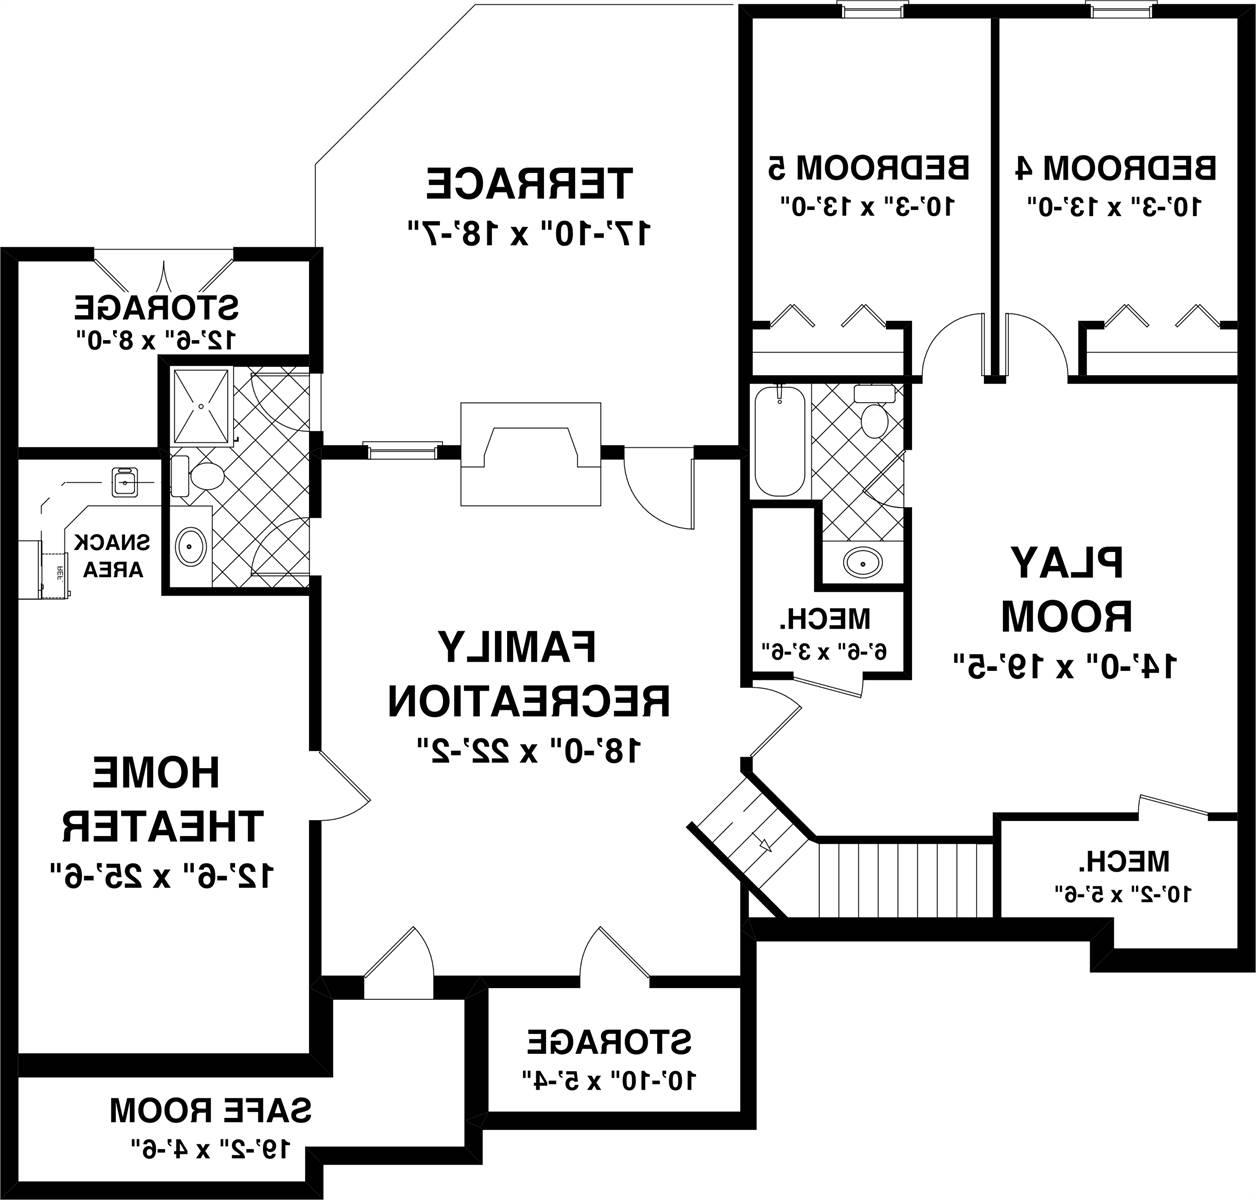 Optional Basement Plan image of The Blue Ridge House Plan